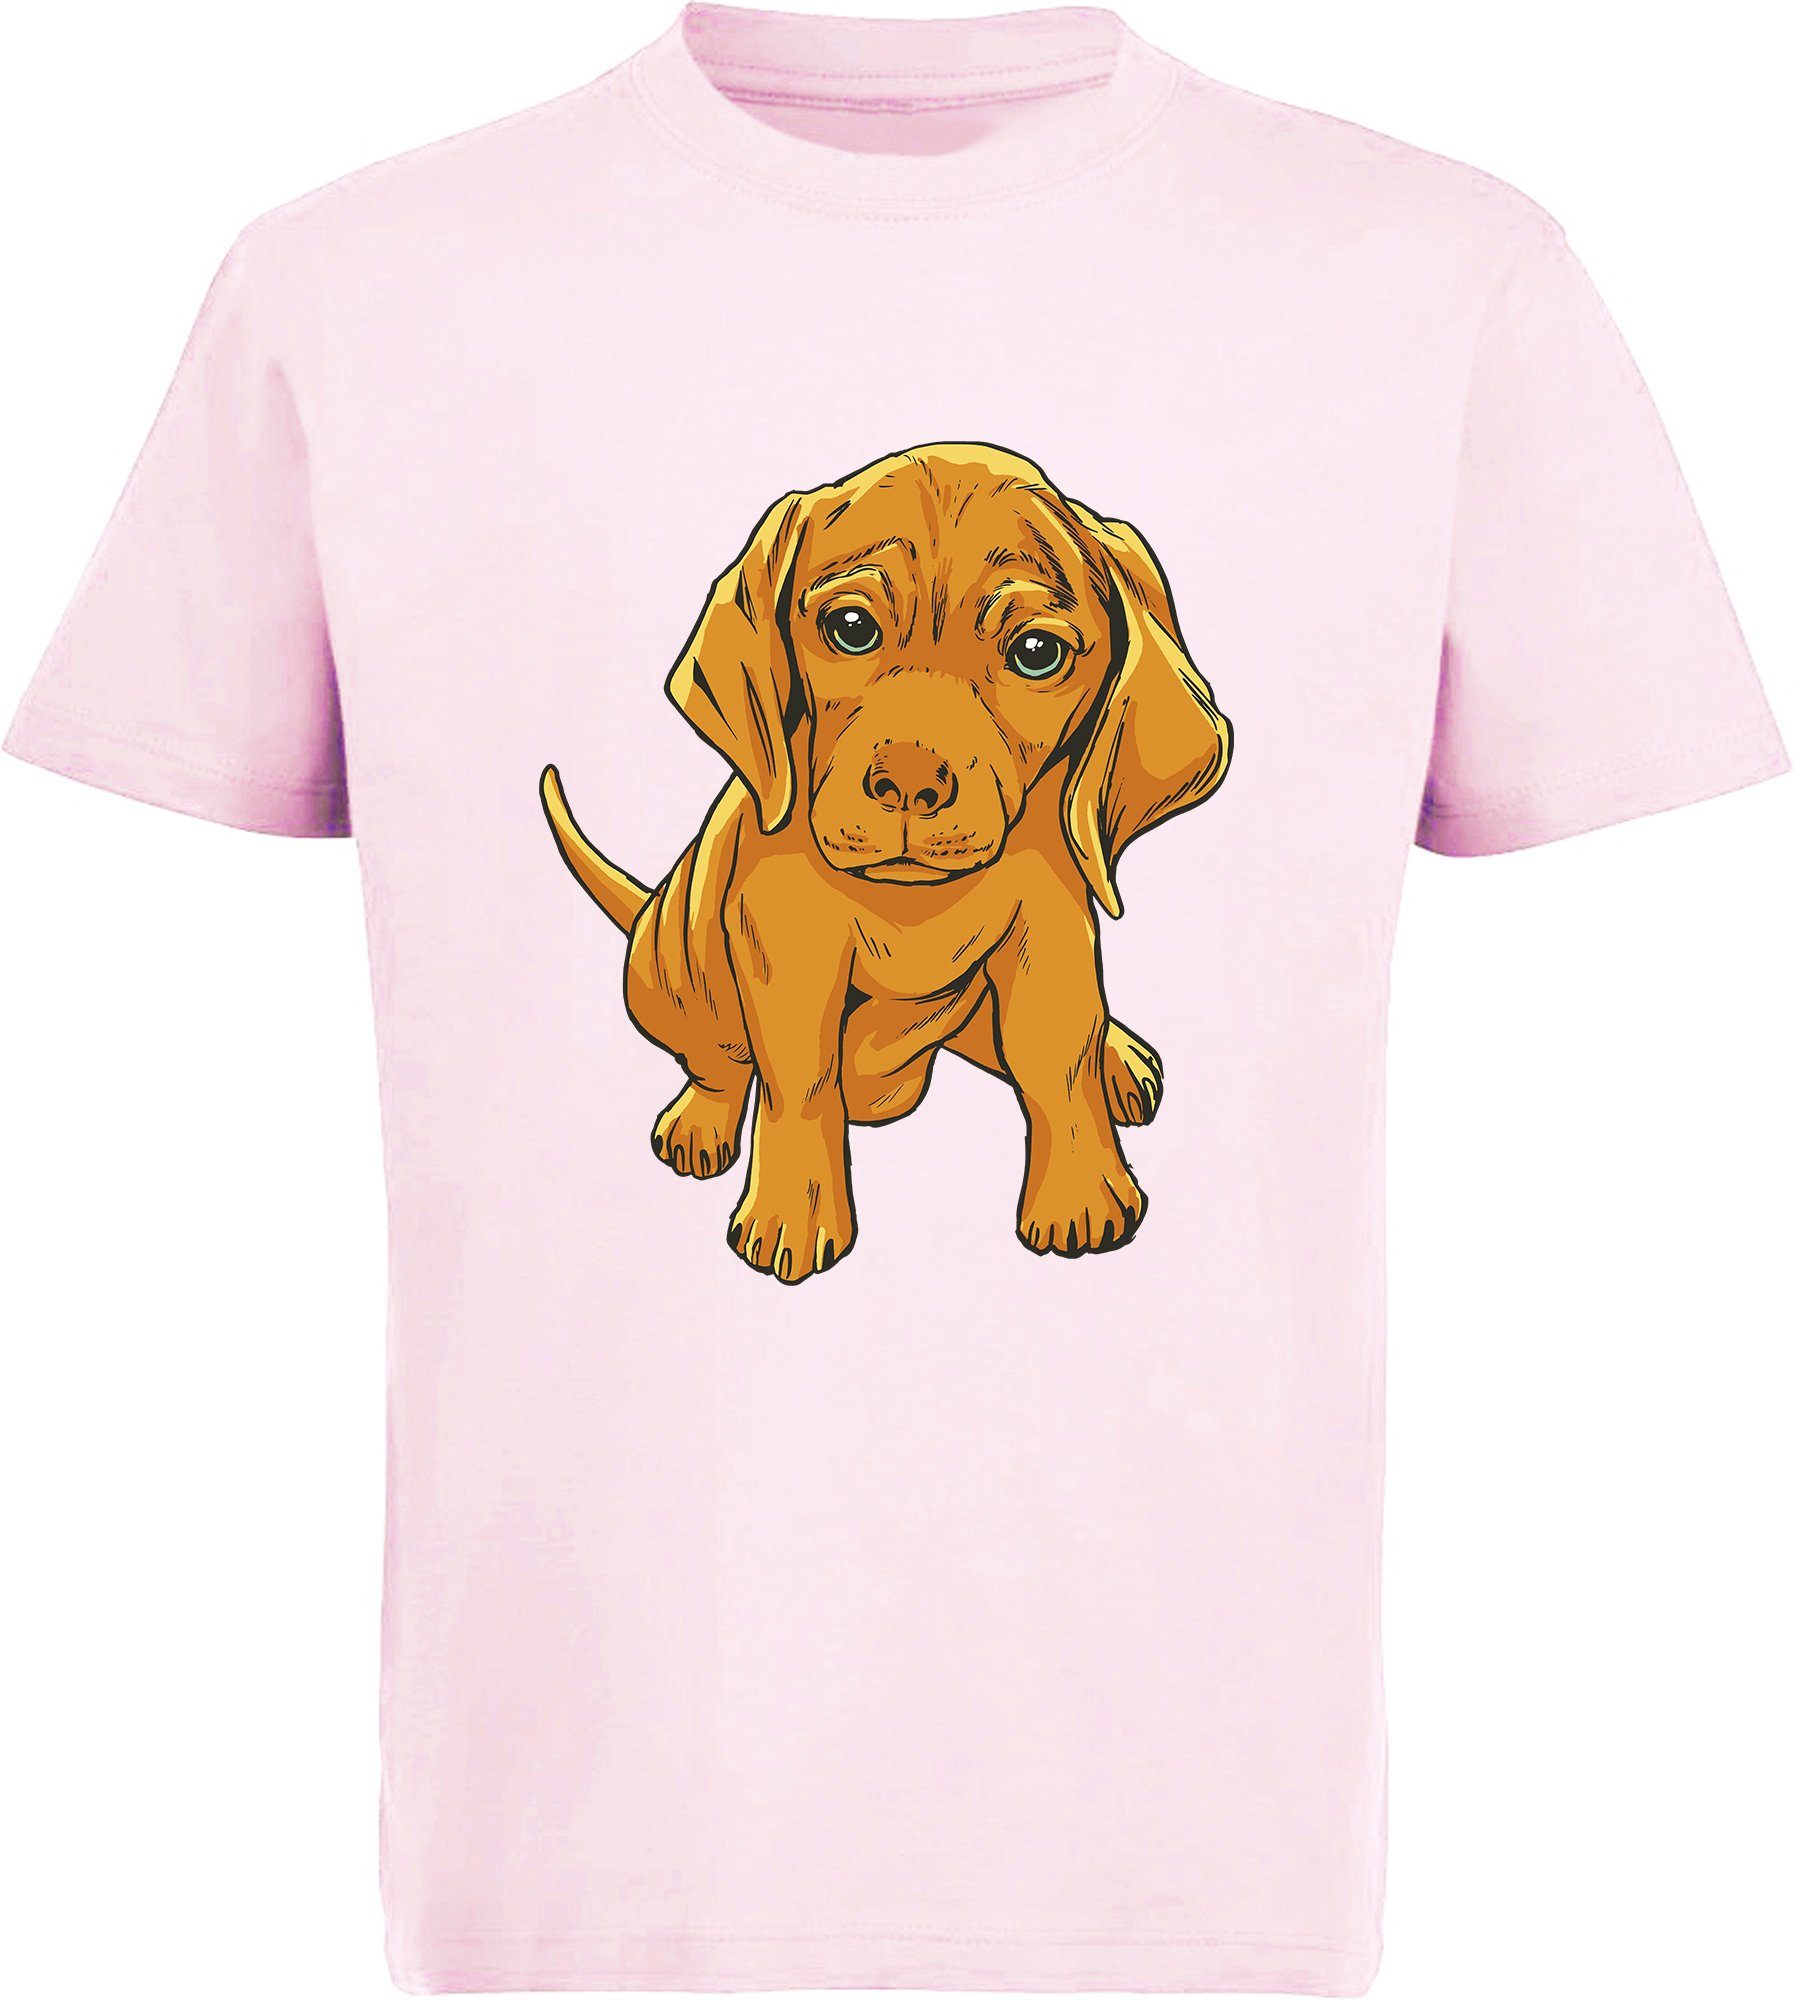 MyDesign24 Print-Shirt Kinder Hunde T-Shirt bedruckt - Süßer Welpe Baumwollshirt mit Aufdruck, i230 rosa